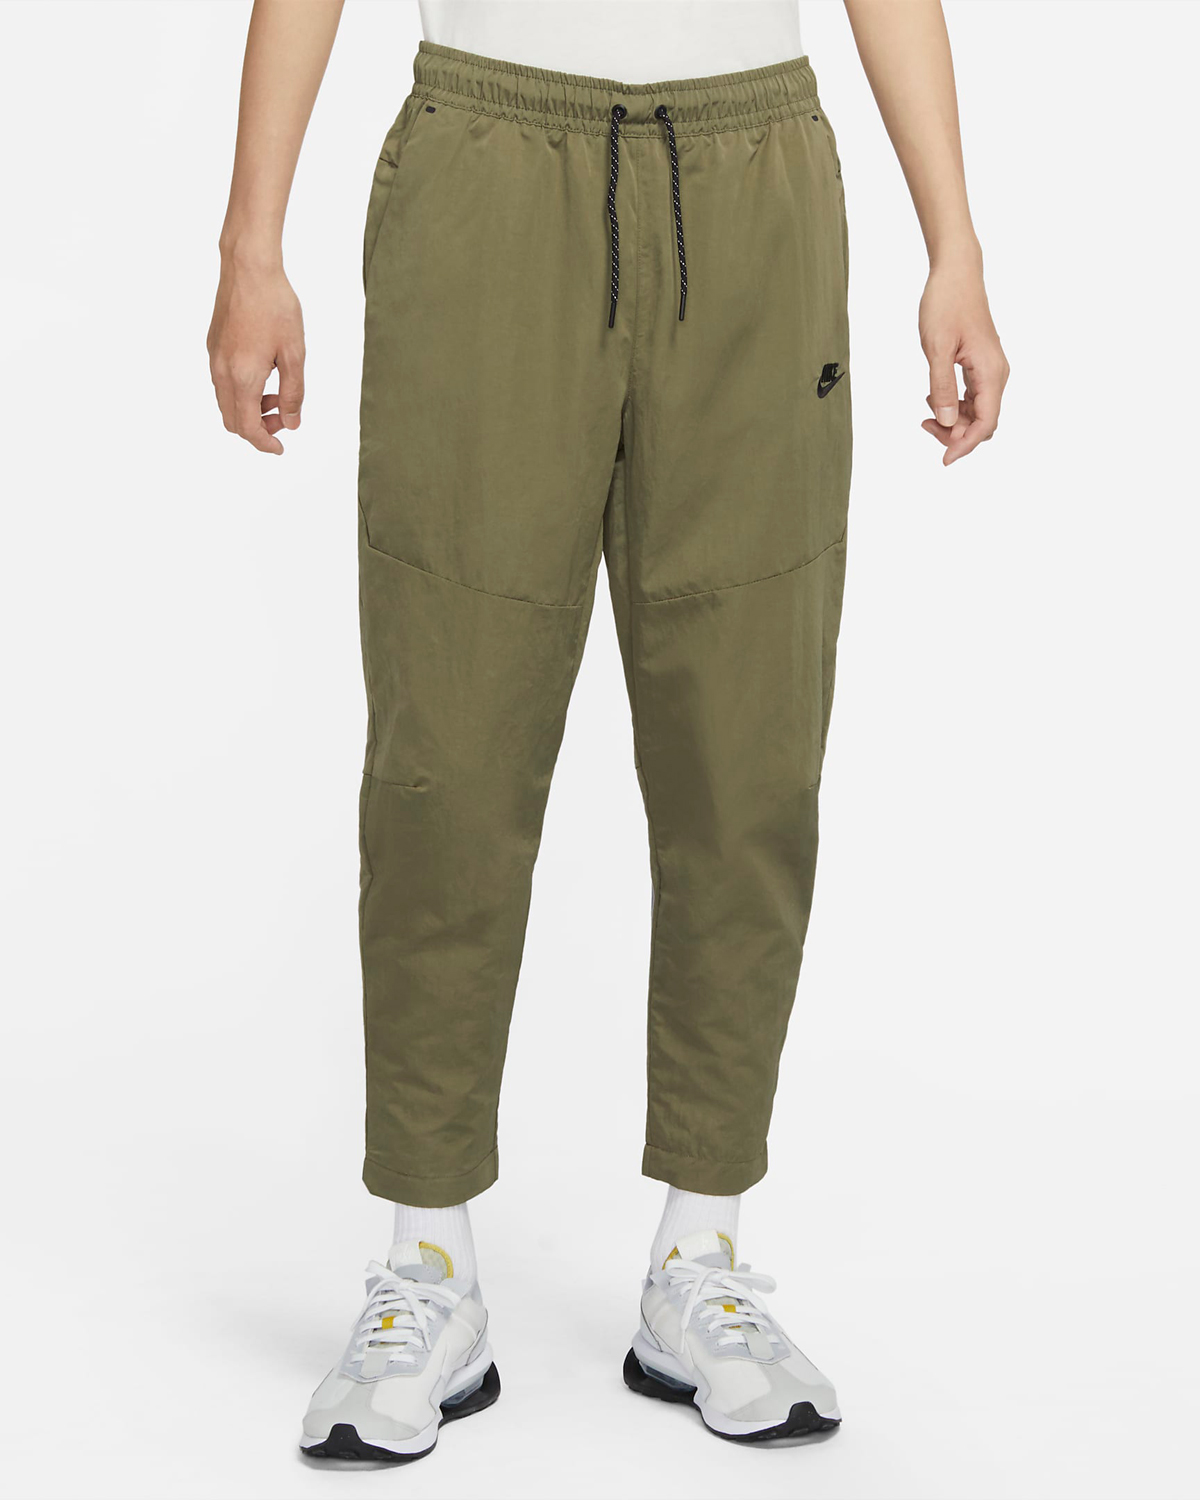 Nike-Sportswear-Tech-Essentials-Commuter-Pants-Medium-Olive